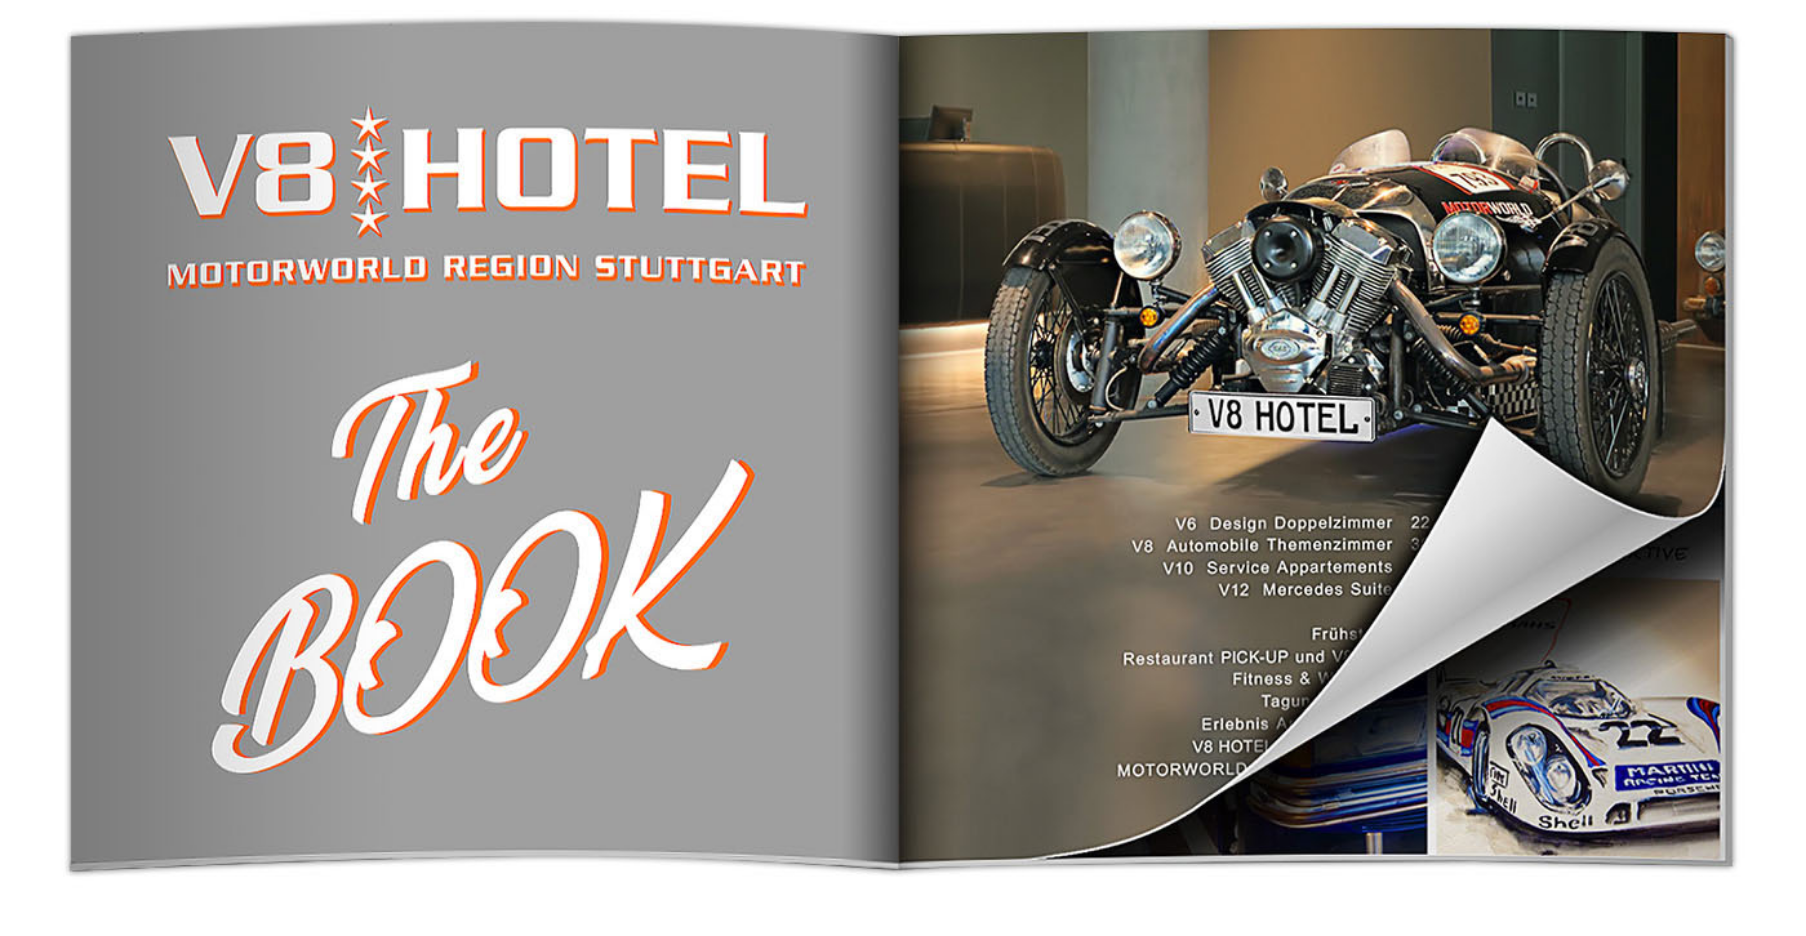 The V8 Hotel brochure